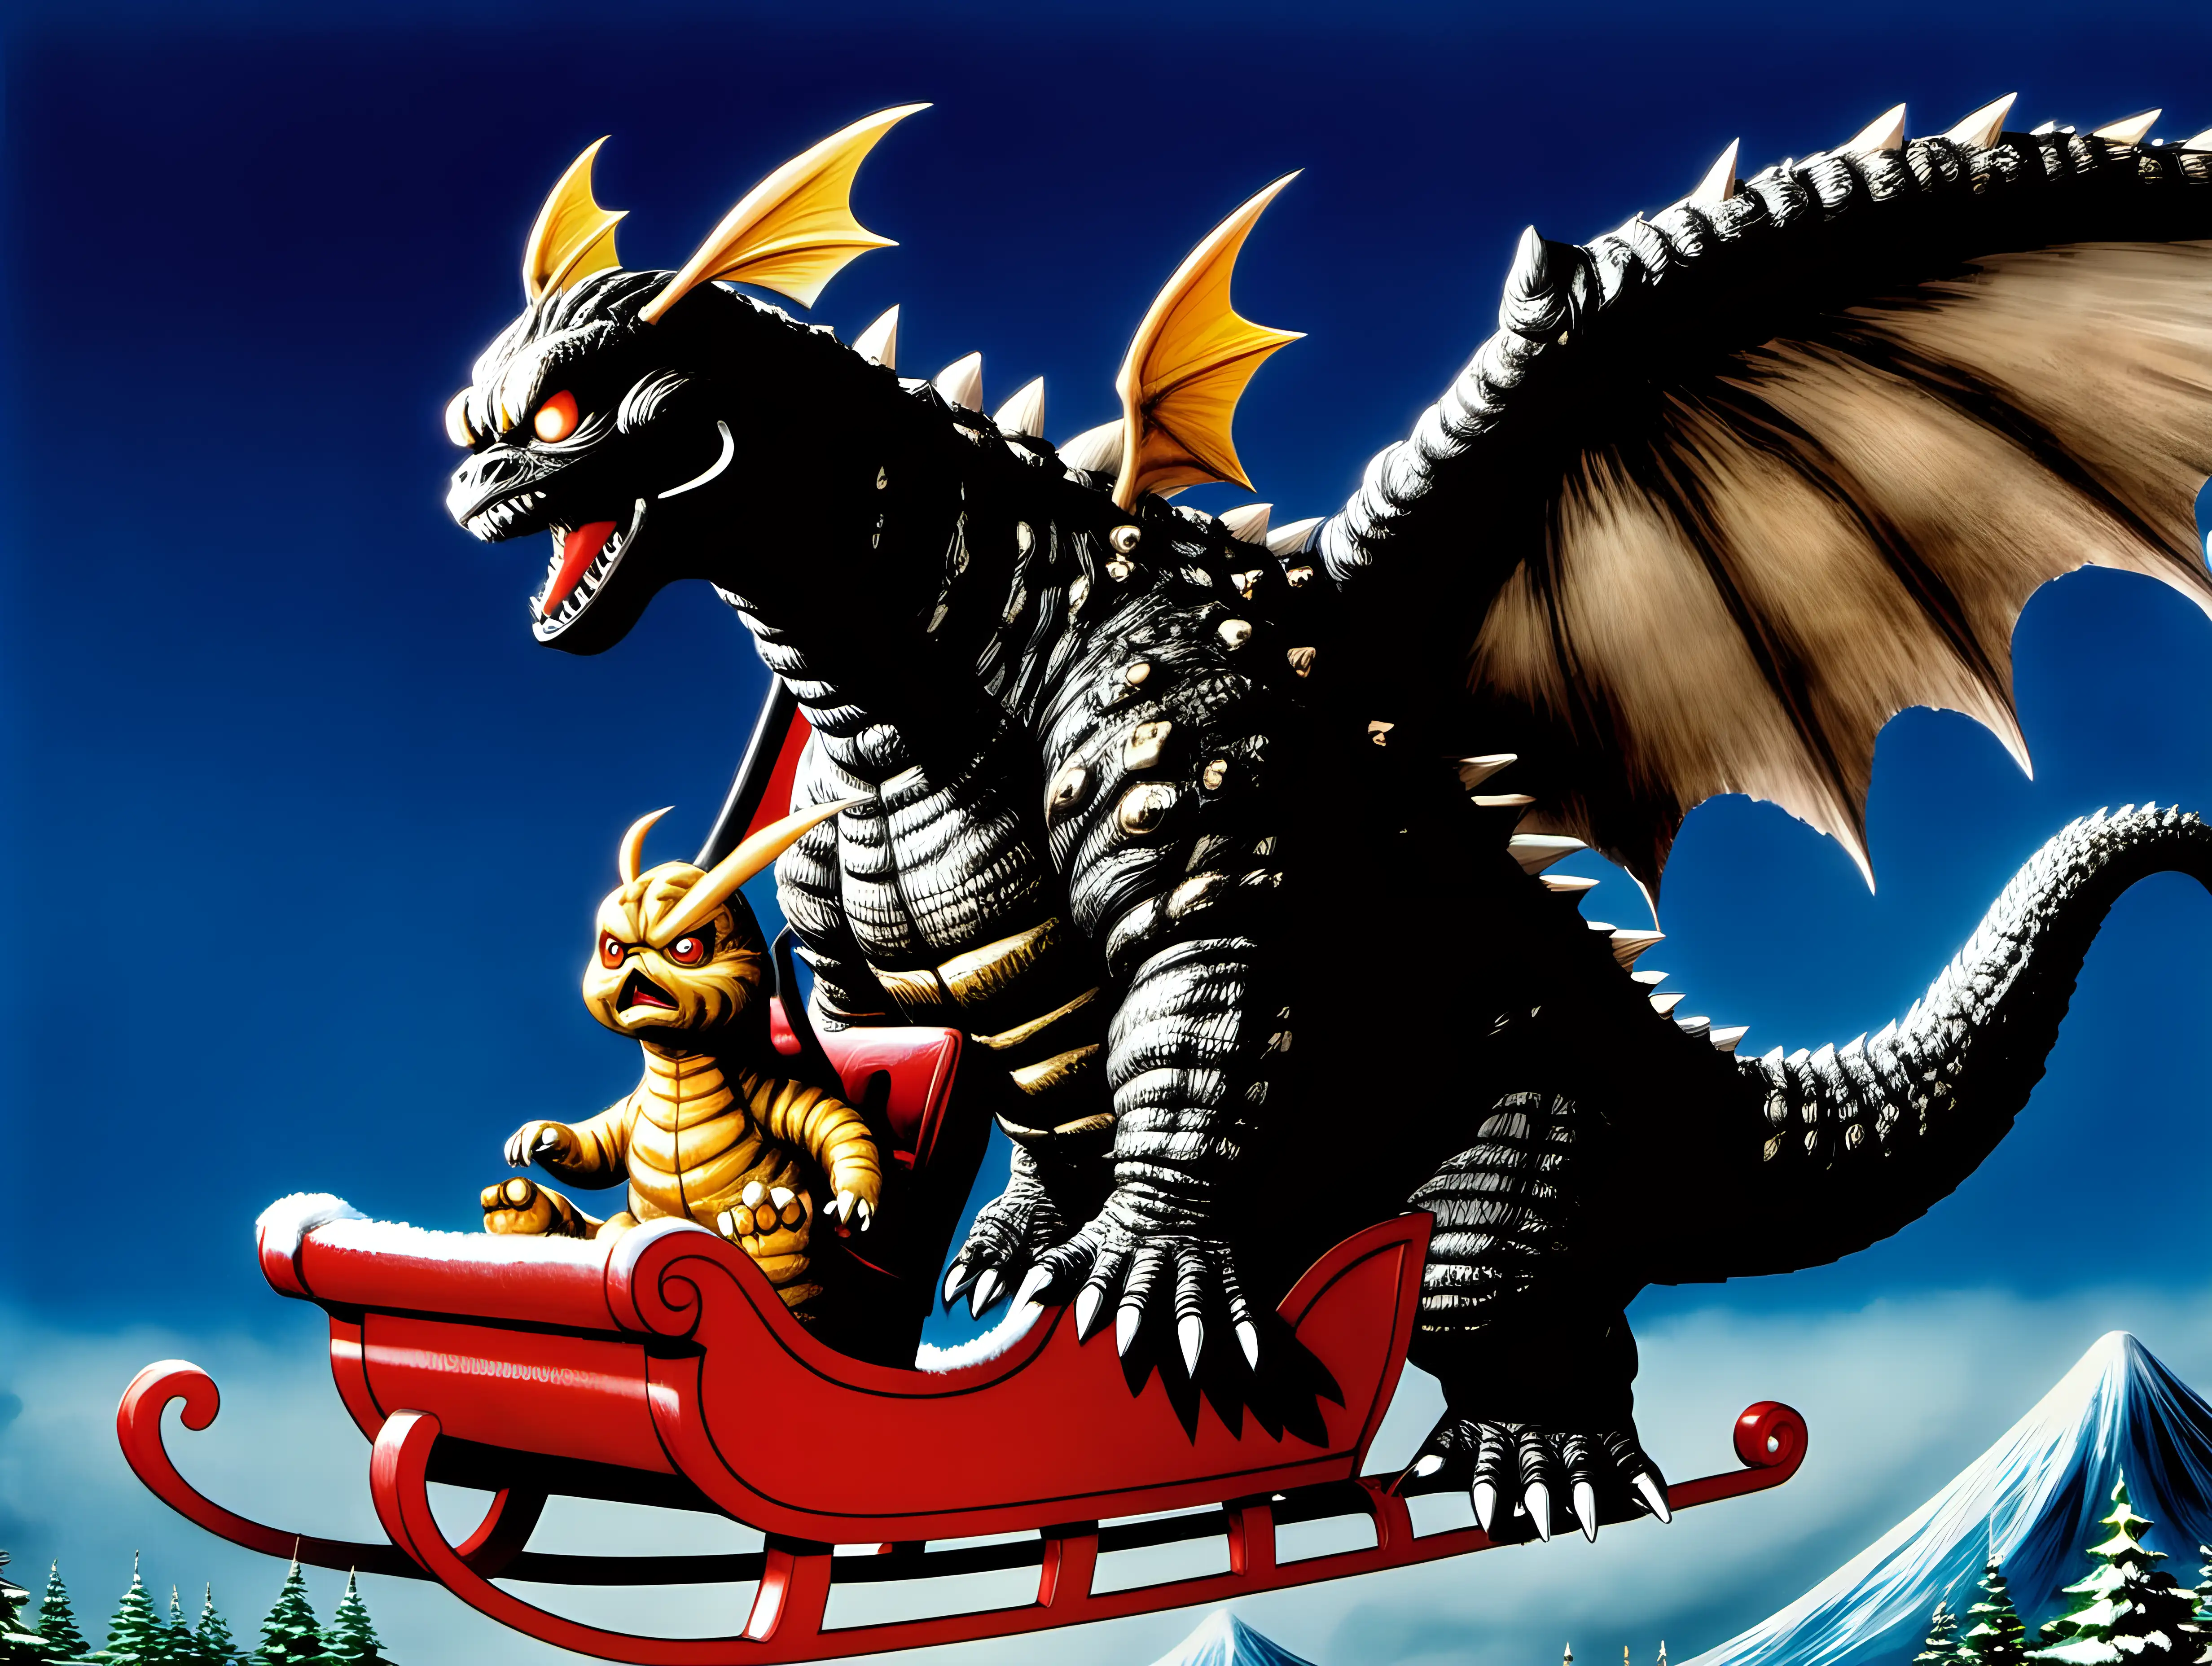 Epic Christmas Adventure Godzilla and Mothra Soar in Santas Sleigh